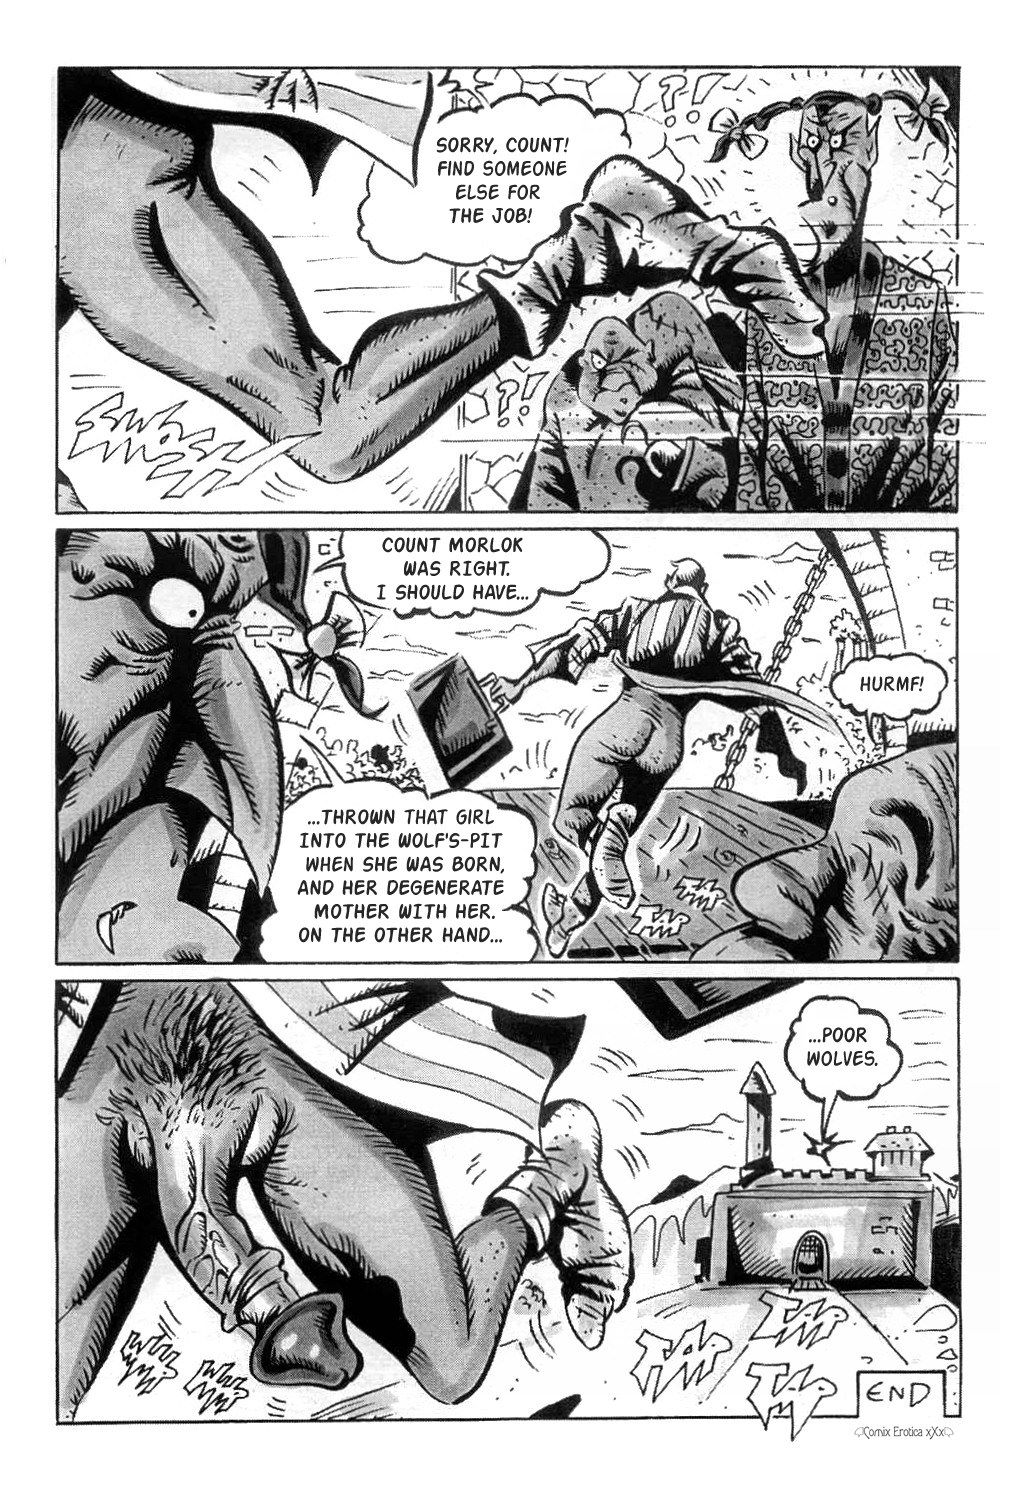 Samurella by Stephan Hagenow page 19